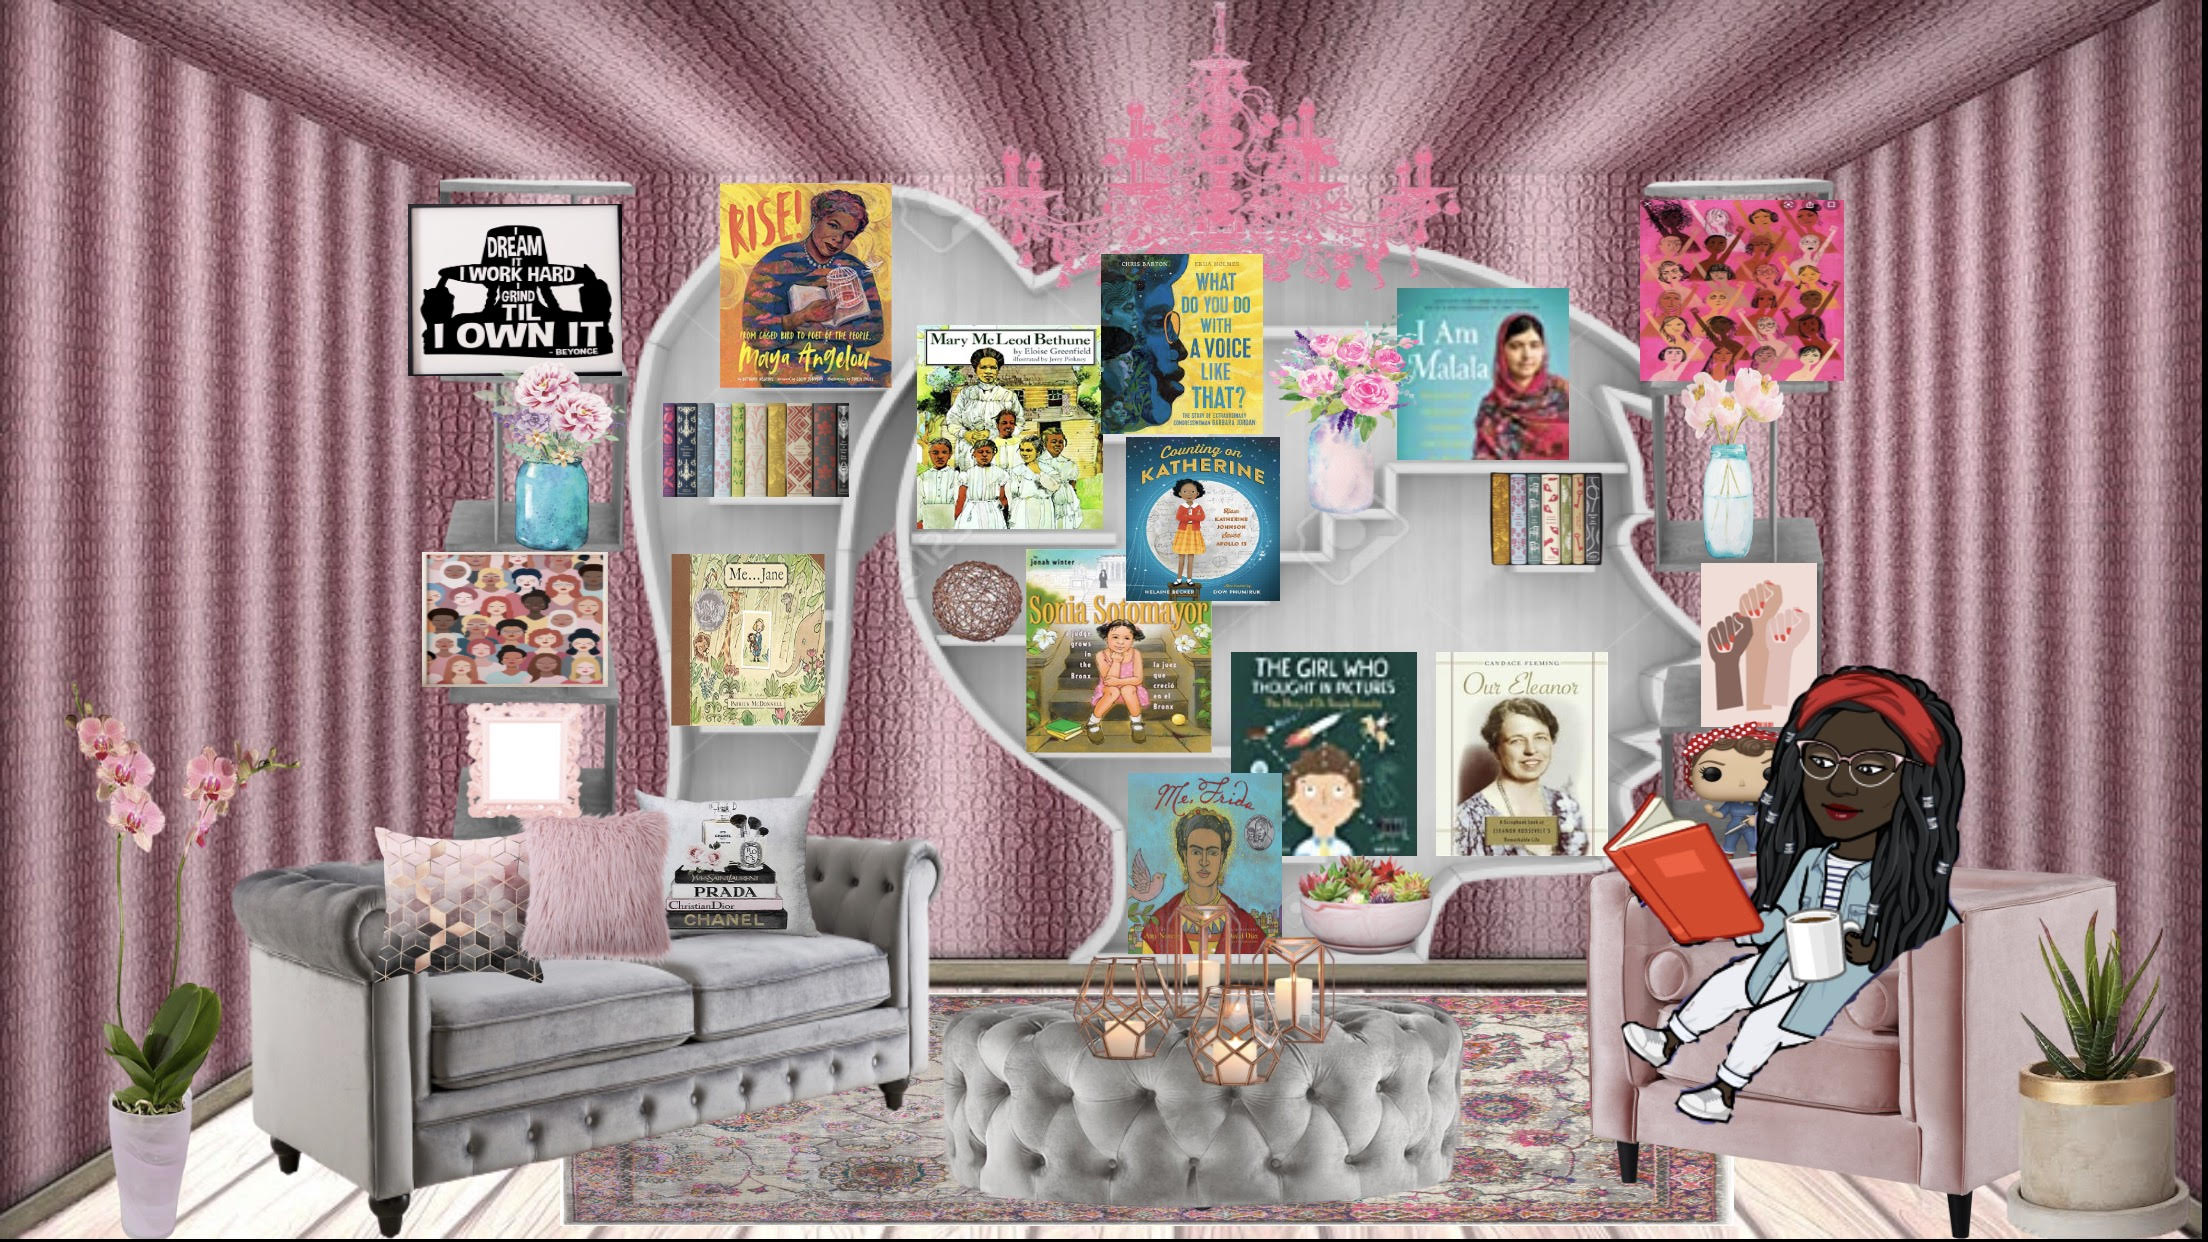 Detail from the Pink Velvet Veld Interactive Library